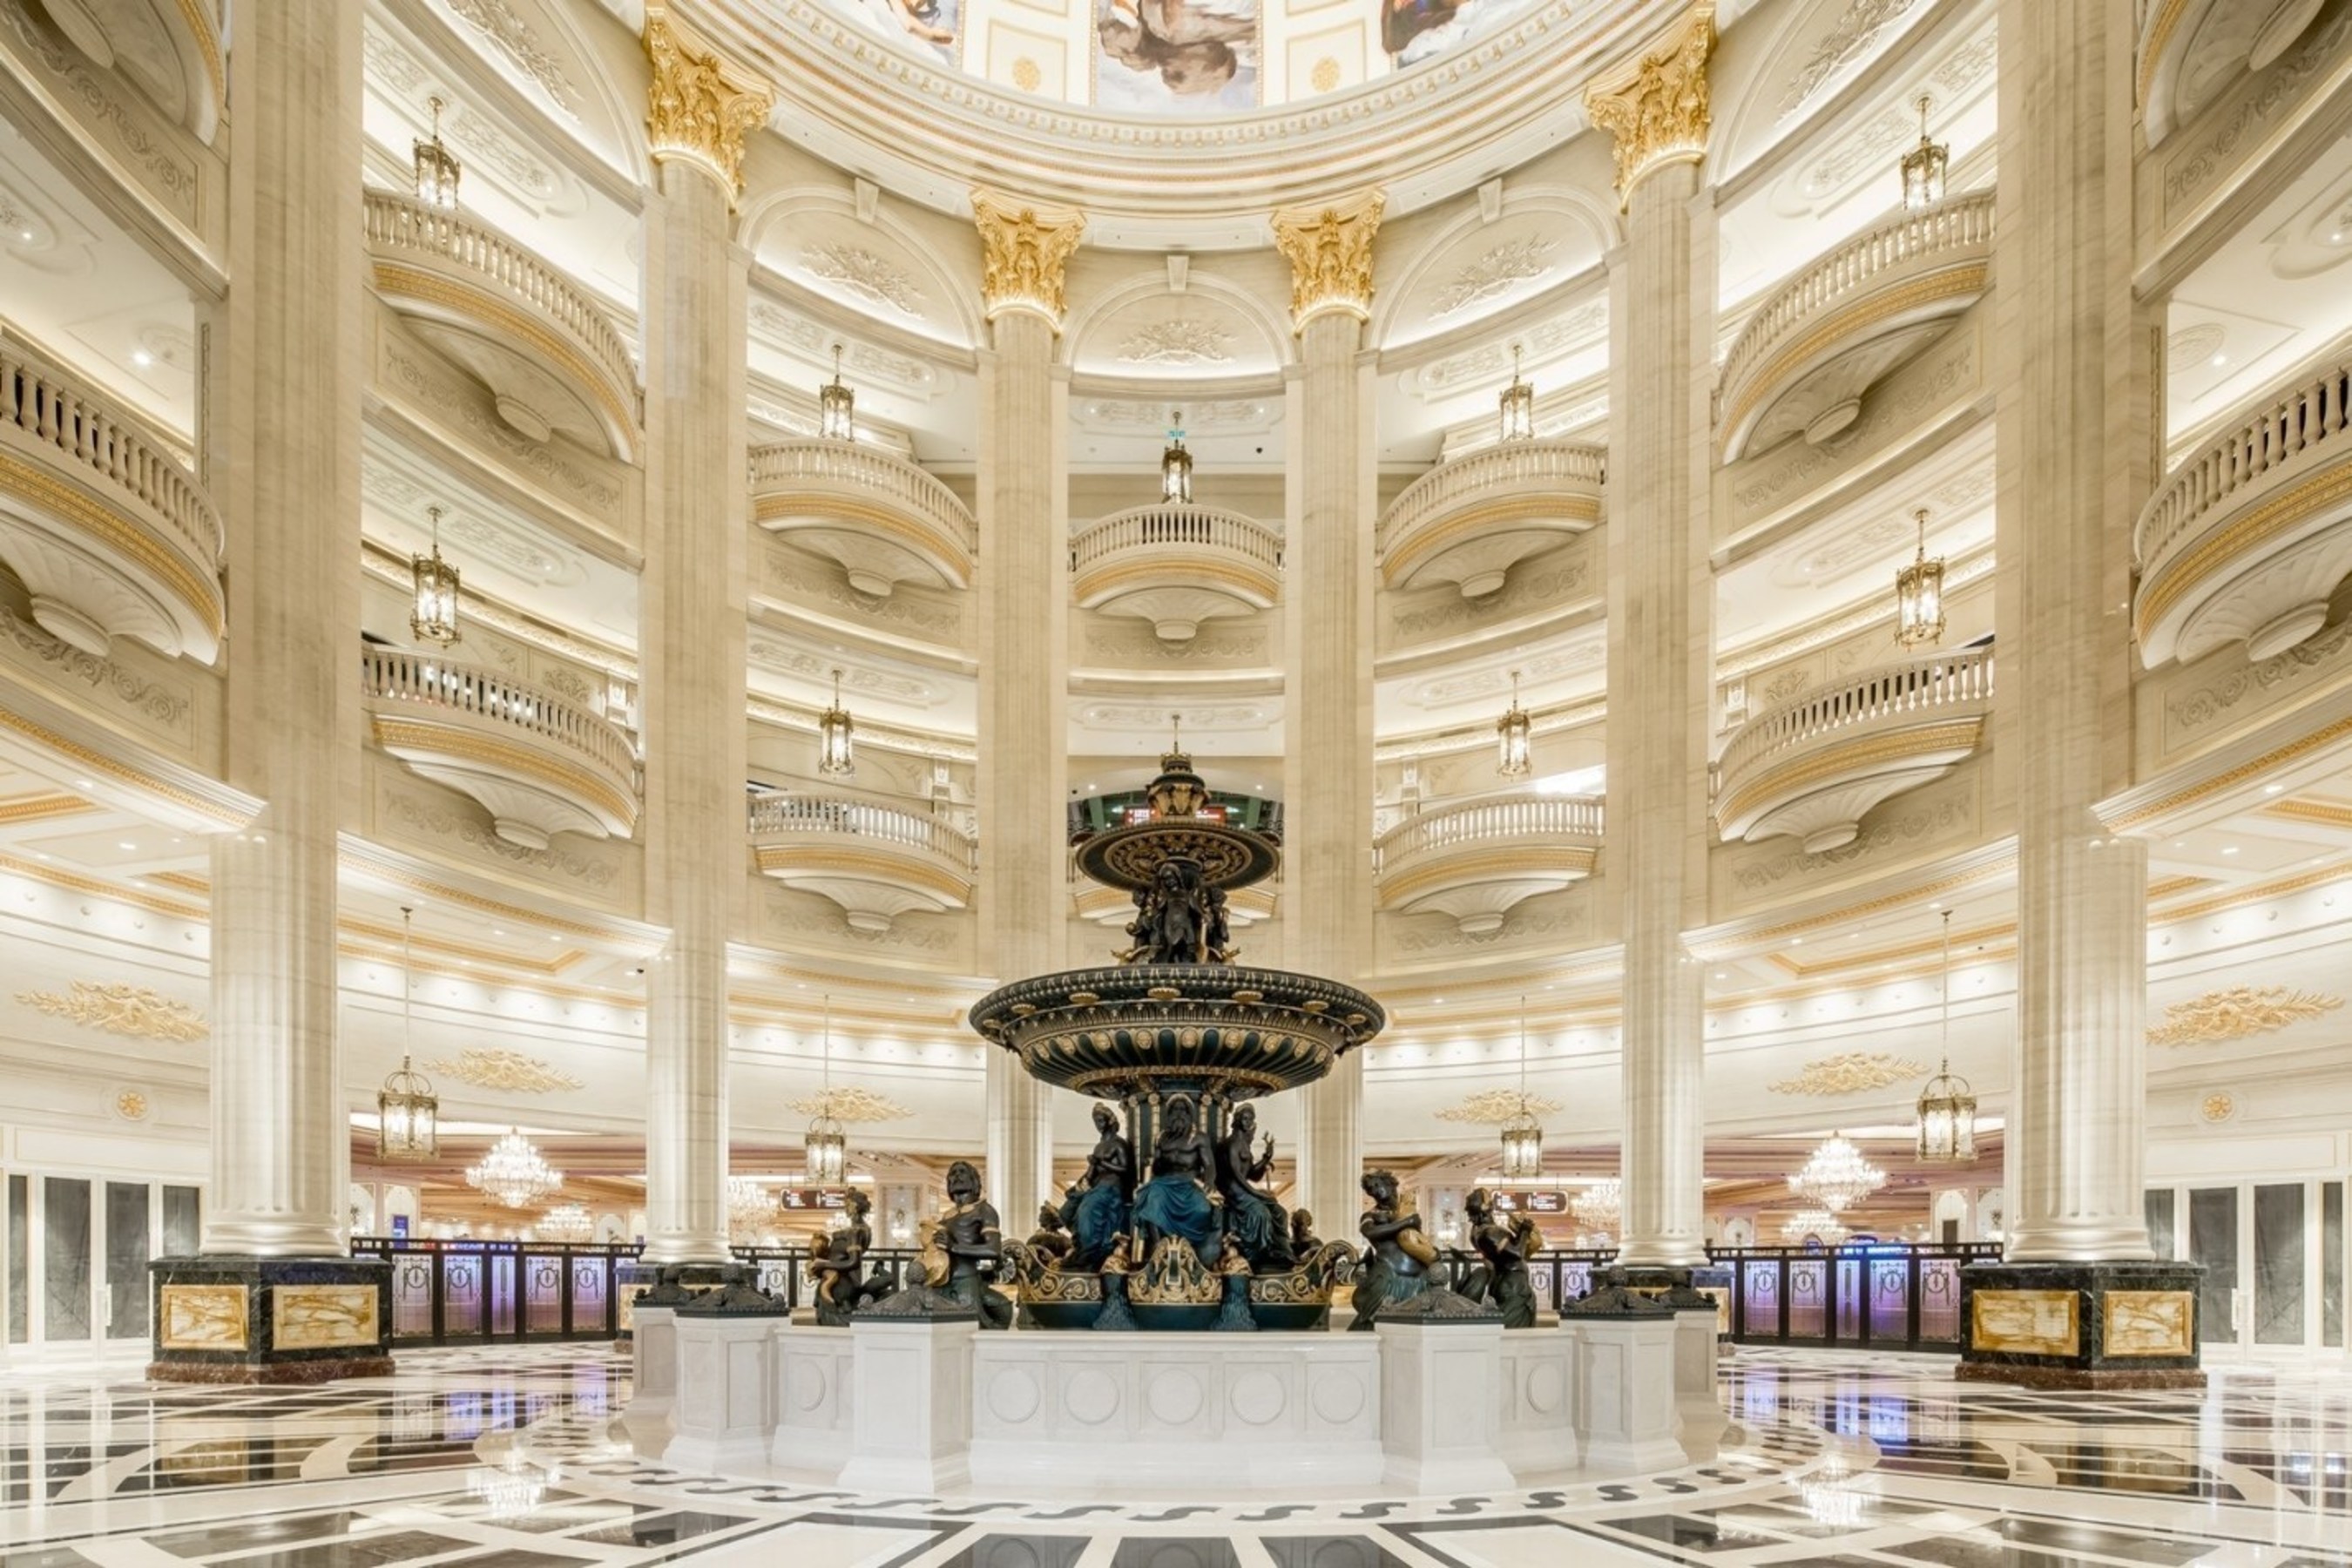 An expansive and elegant rotunda awaits visitors of The Parisian Macao.